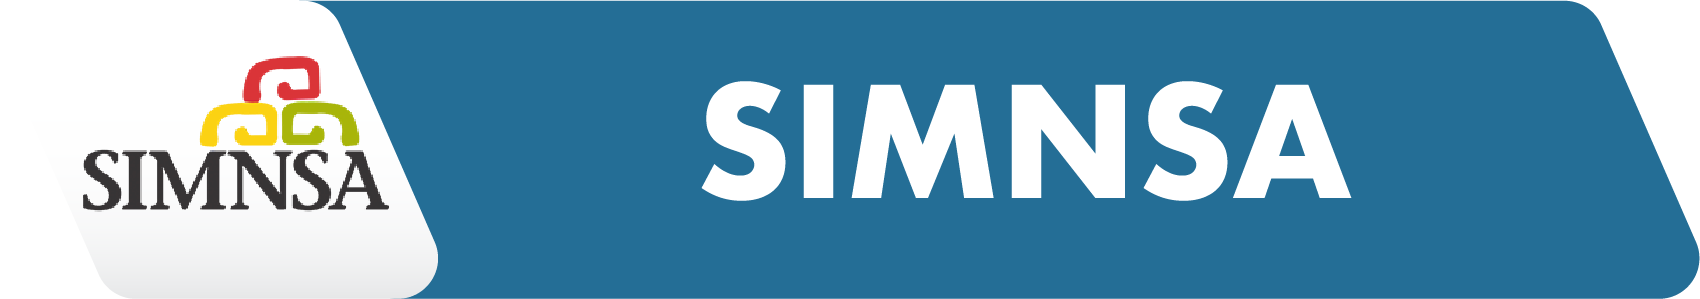 SIMNSA Button